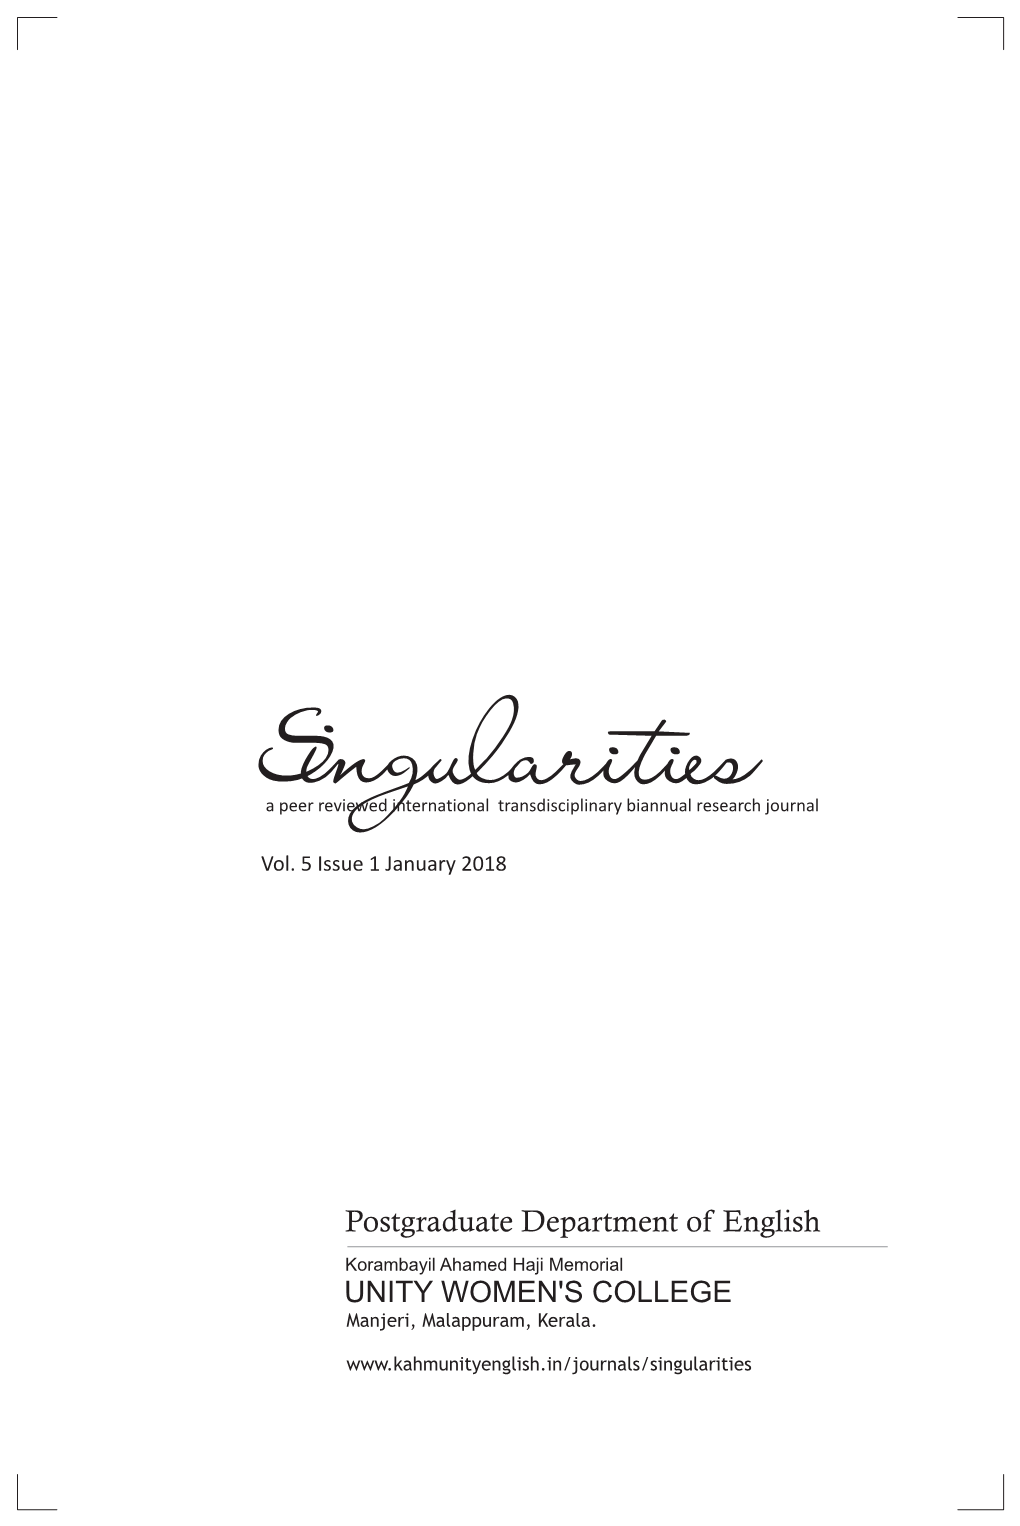 Postgraduate Department of English